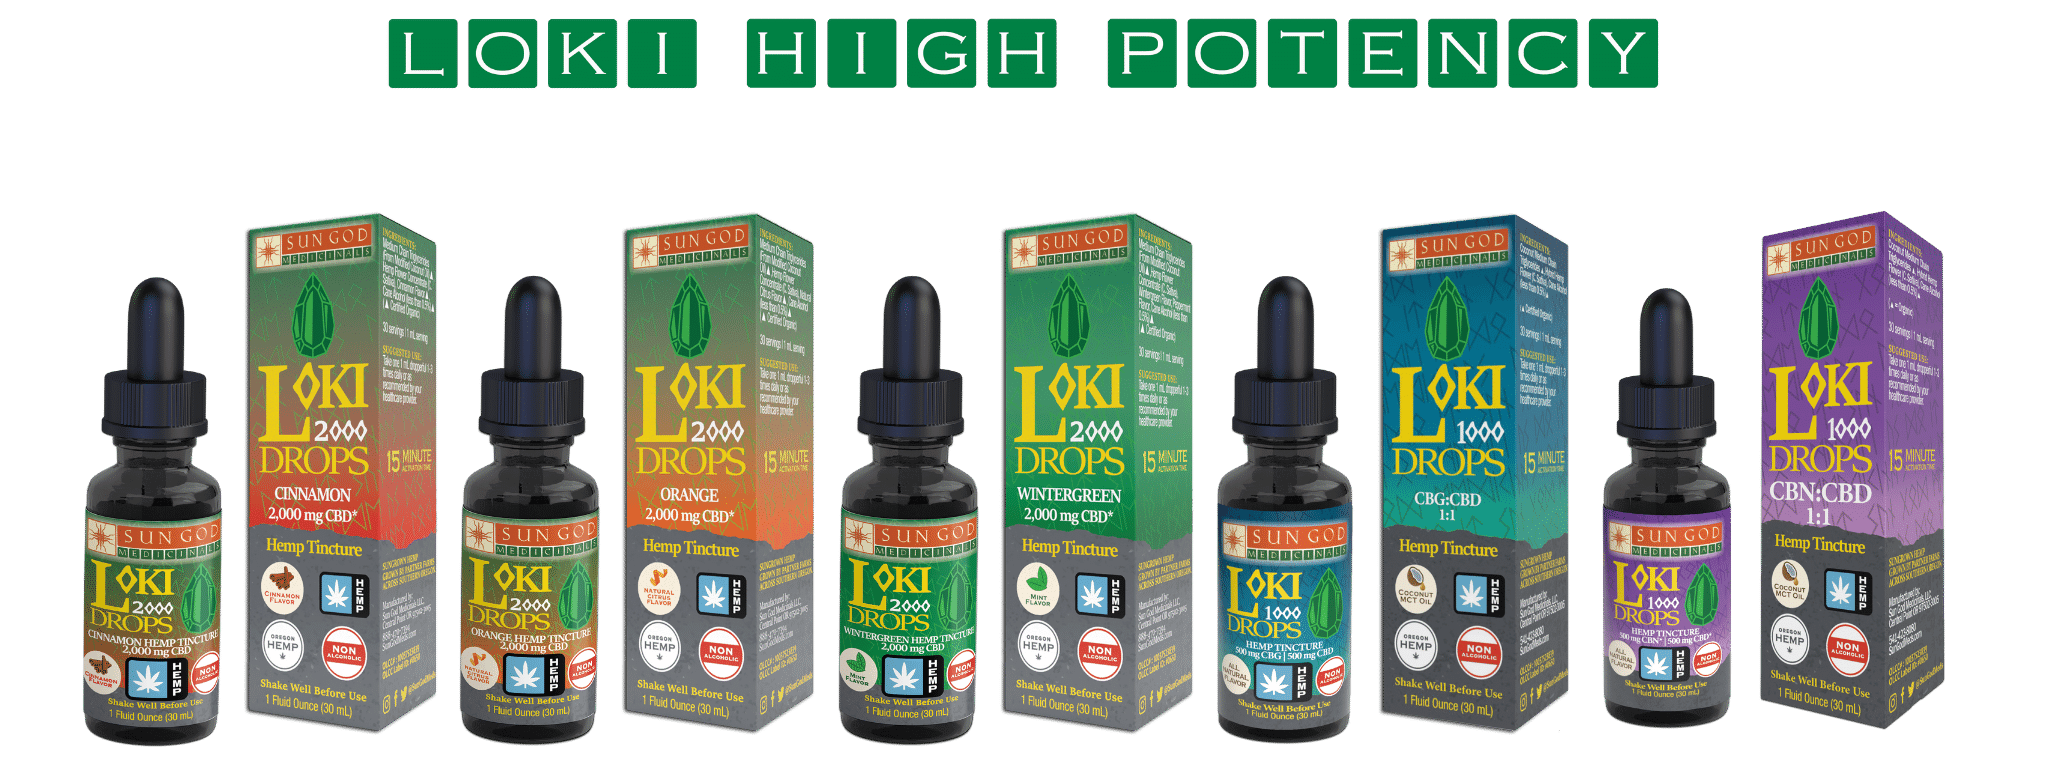 High Potency Hemp Products - by Sun God Medicinals